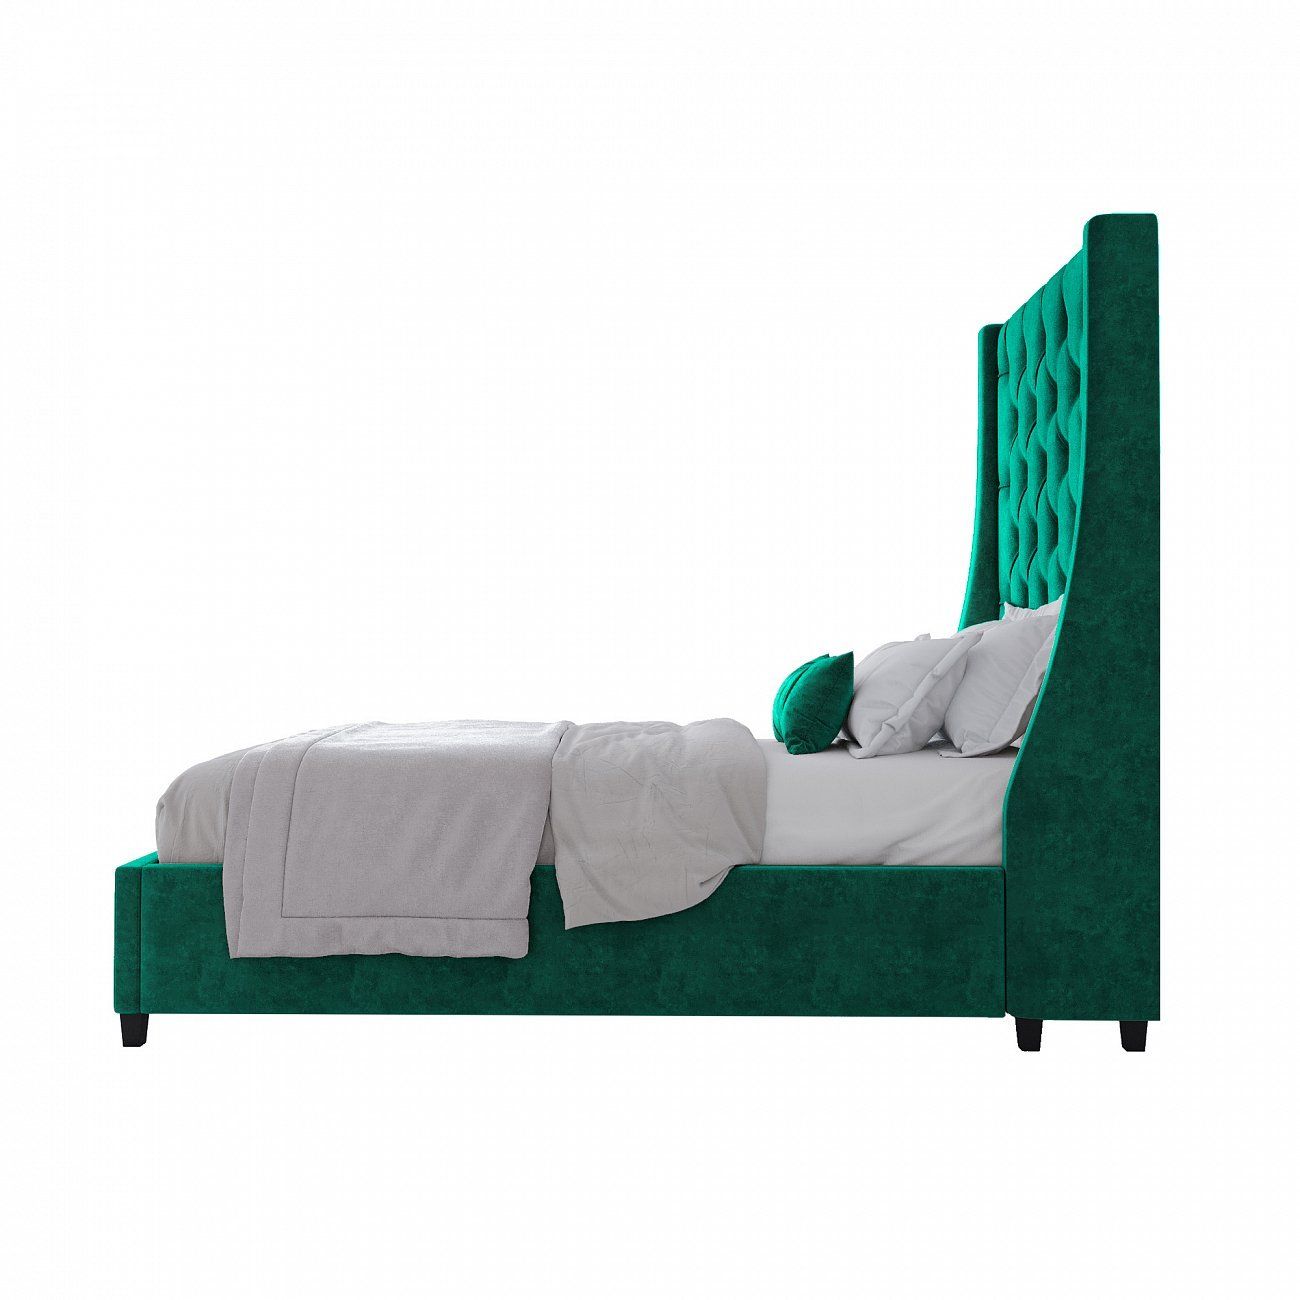 Single bed 90x200 Ada green MR